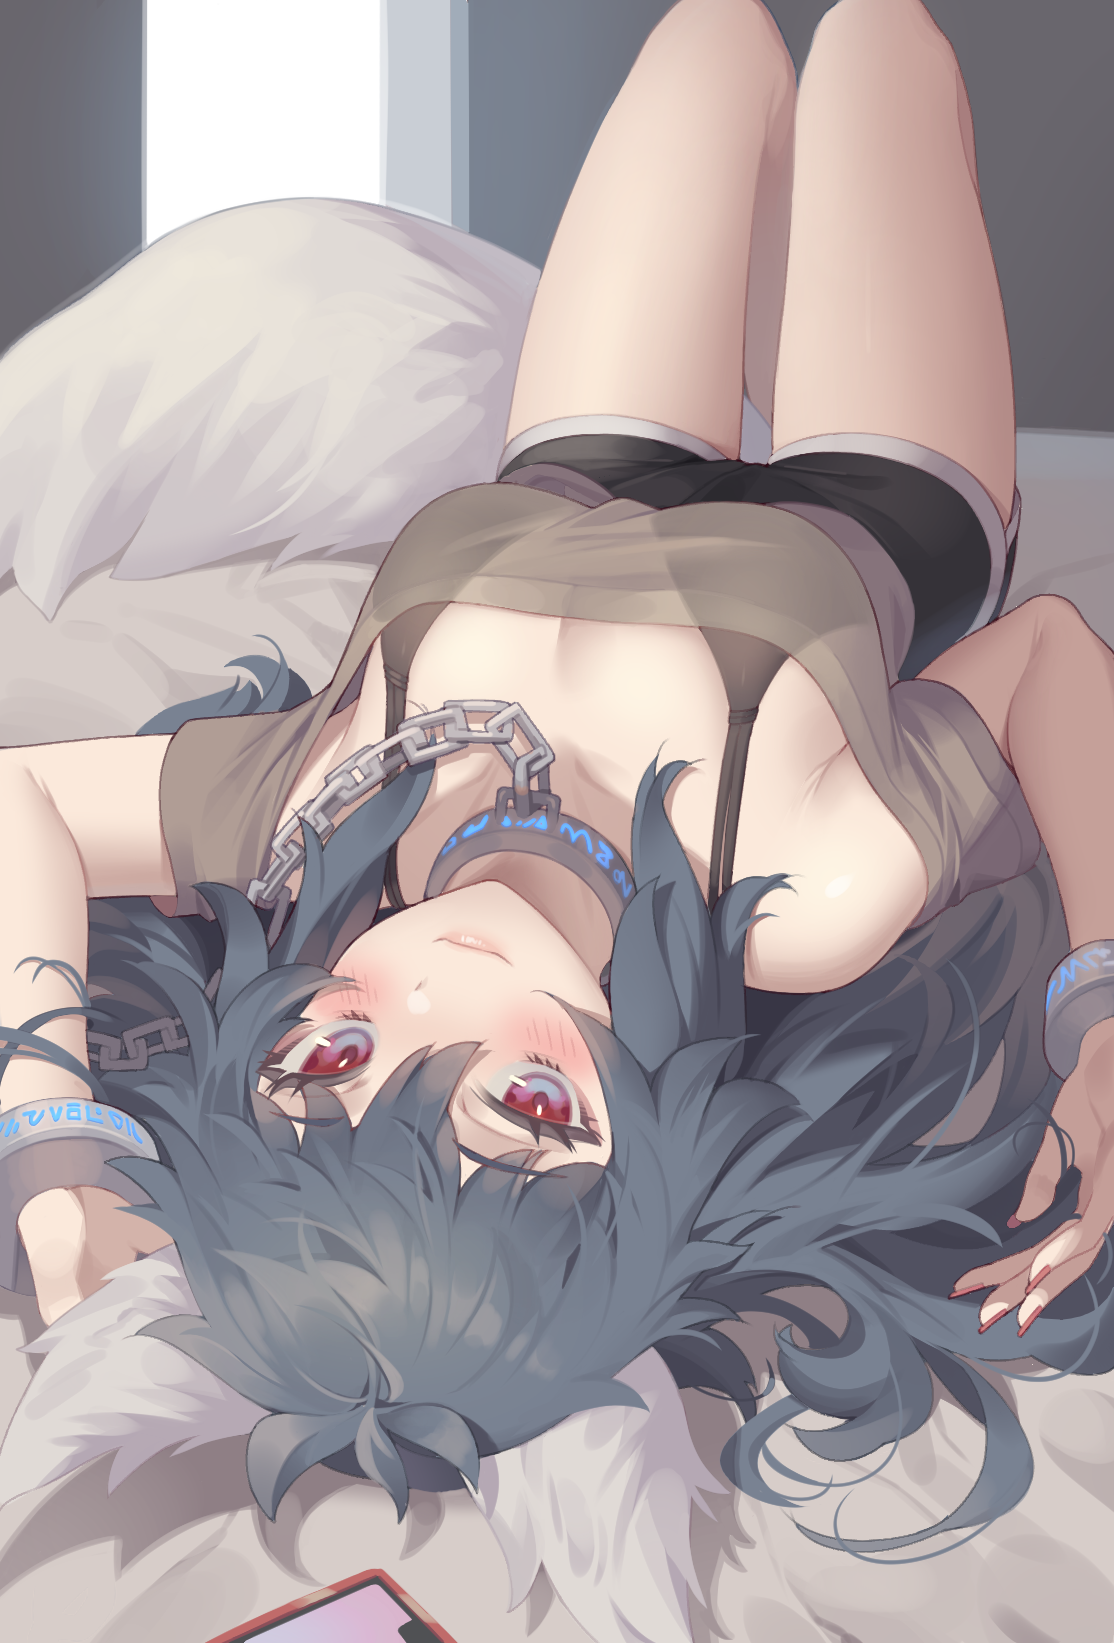 Anime Anime Girls Digital Art Artwork 2D Pixiv Looking At Viewer Lying On Back Red Eyes 1114x1643